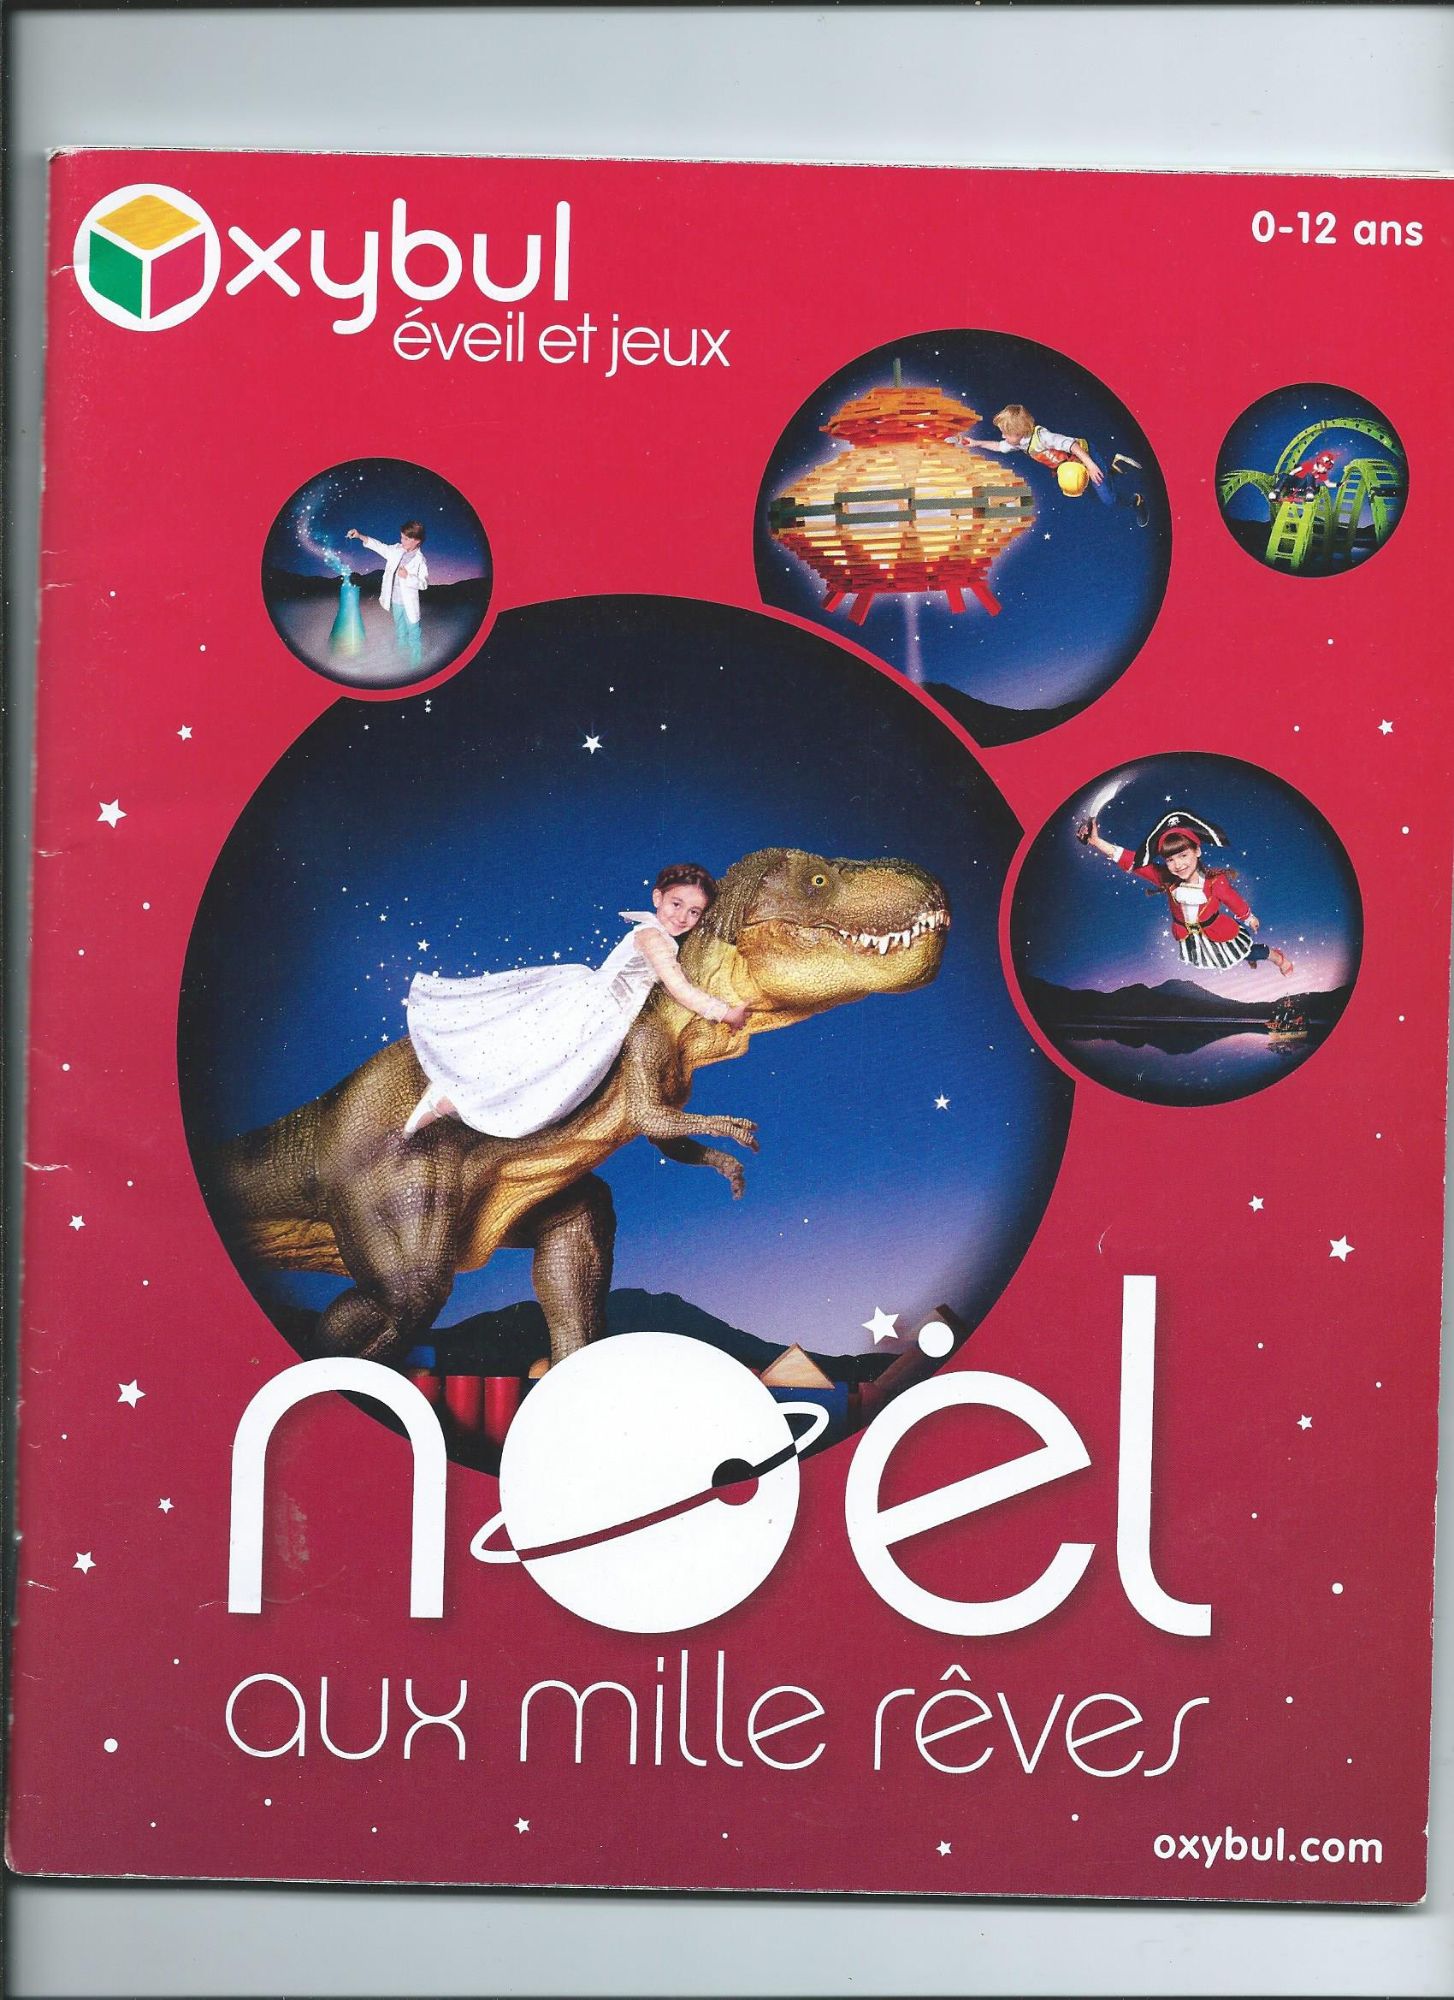 oxybul catalogue noël